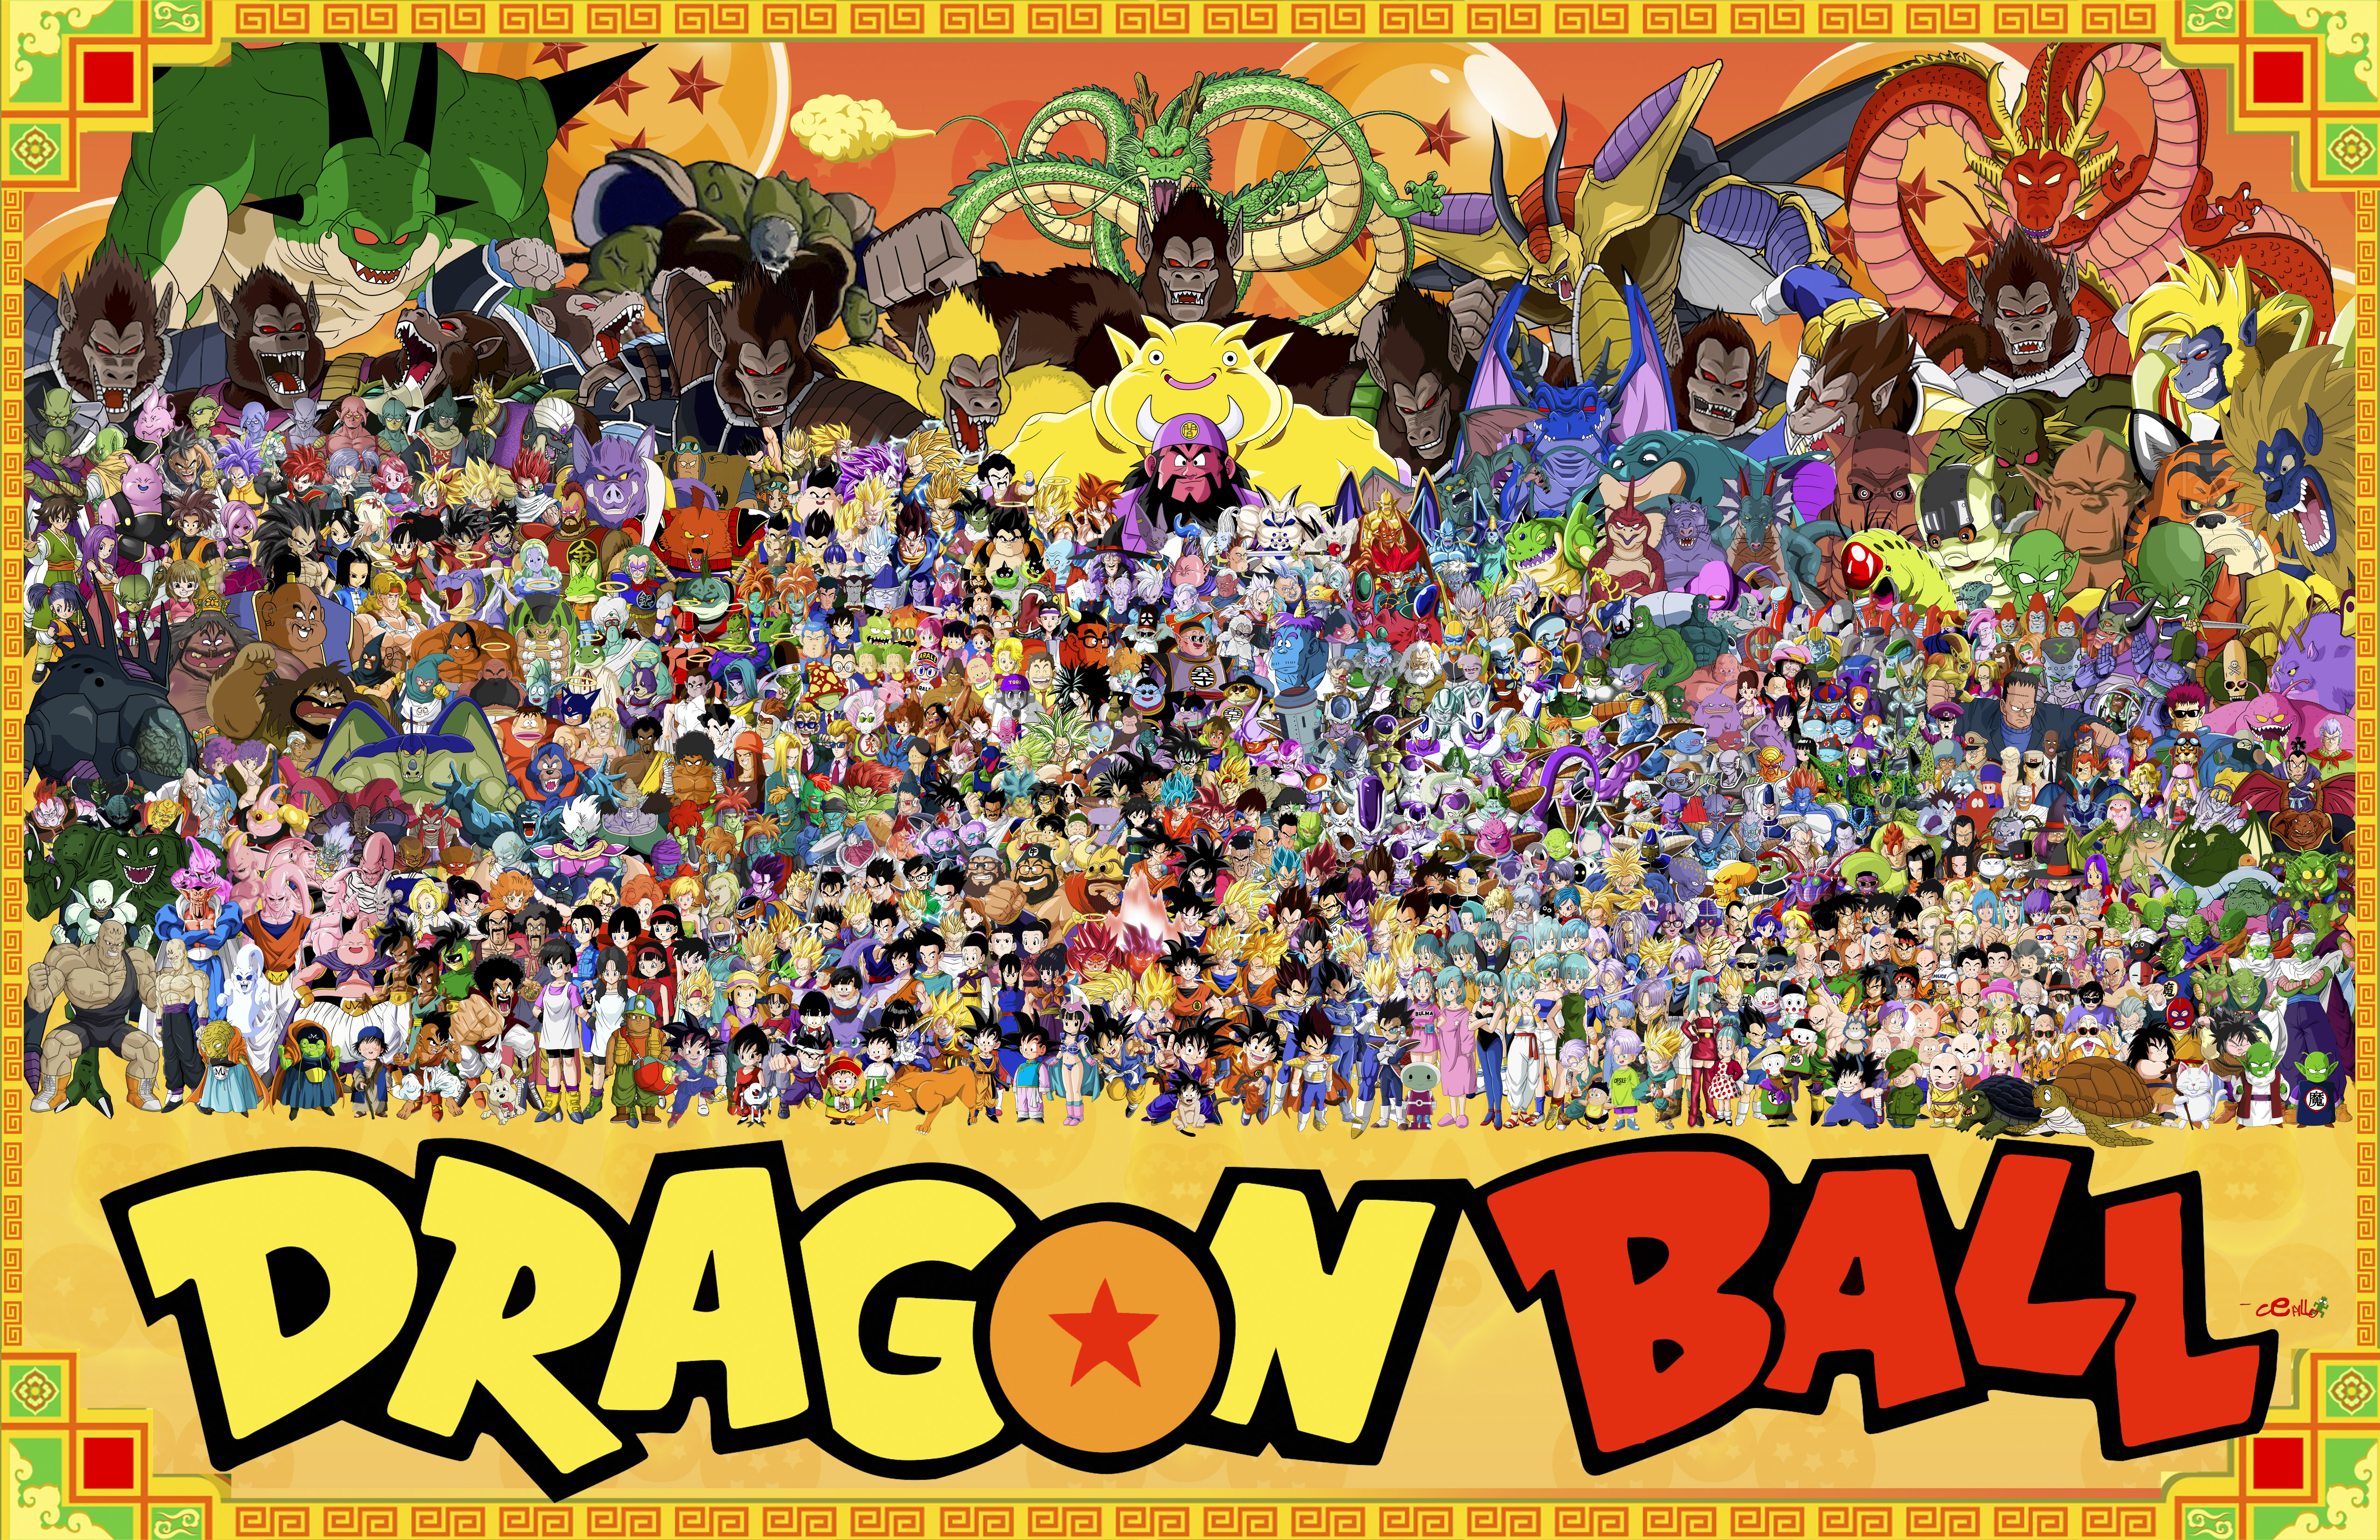 Dragon Ball Z Wallpaper All Characters